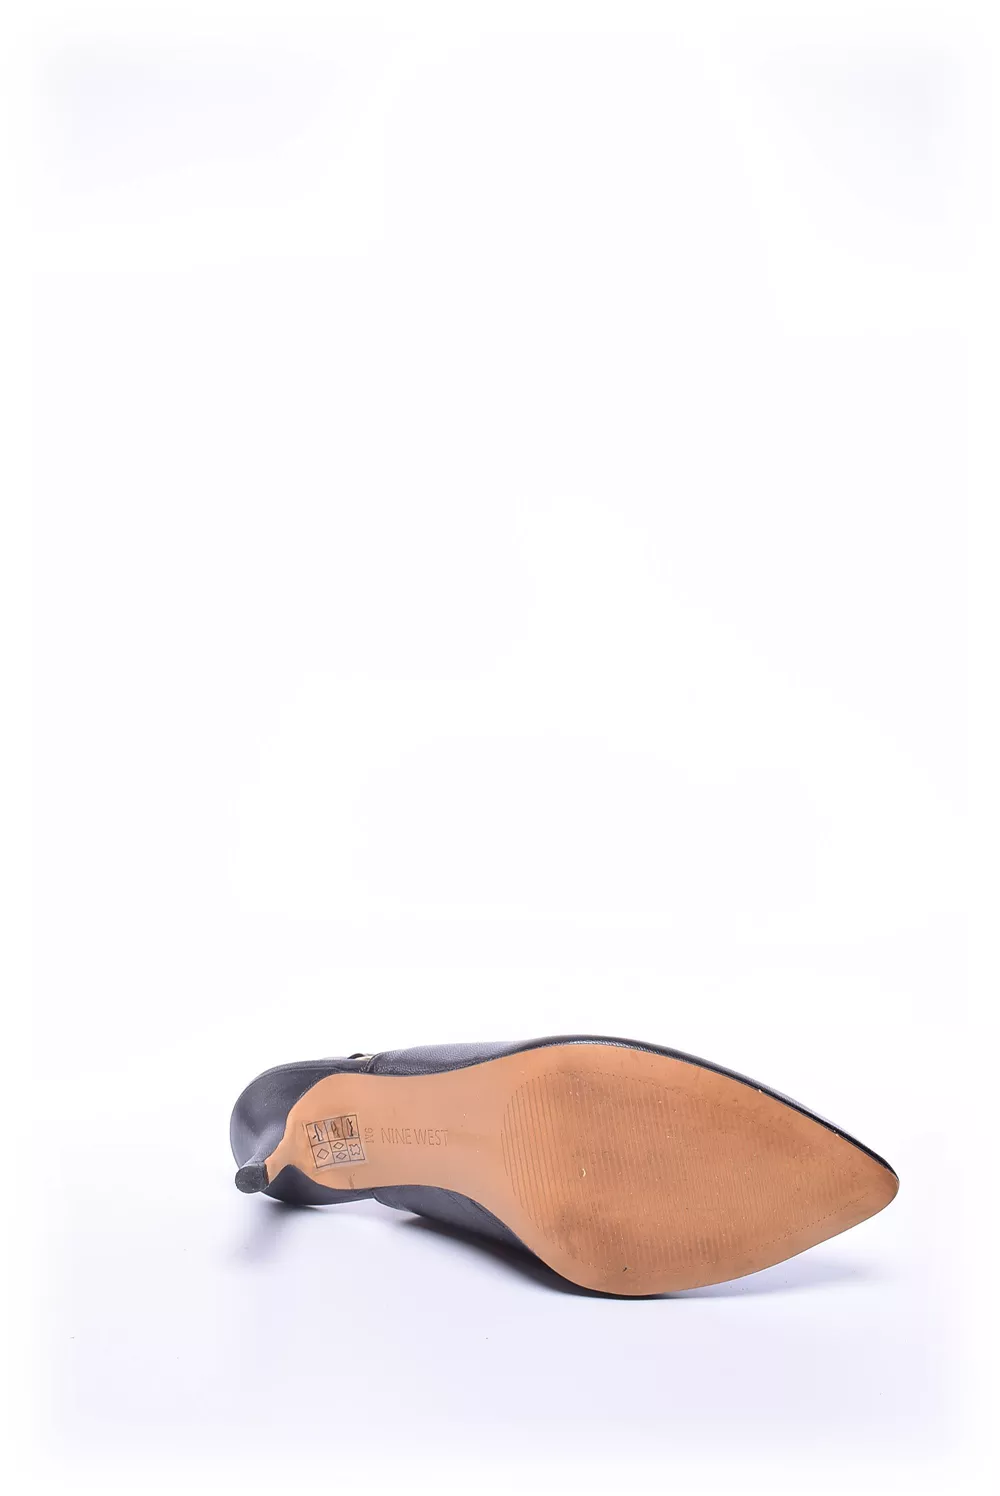 Sandale stiletto dama [2]